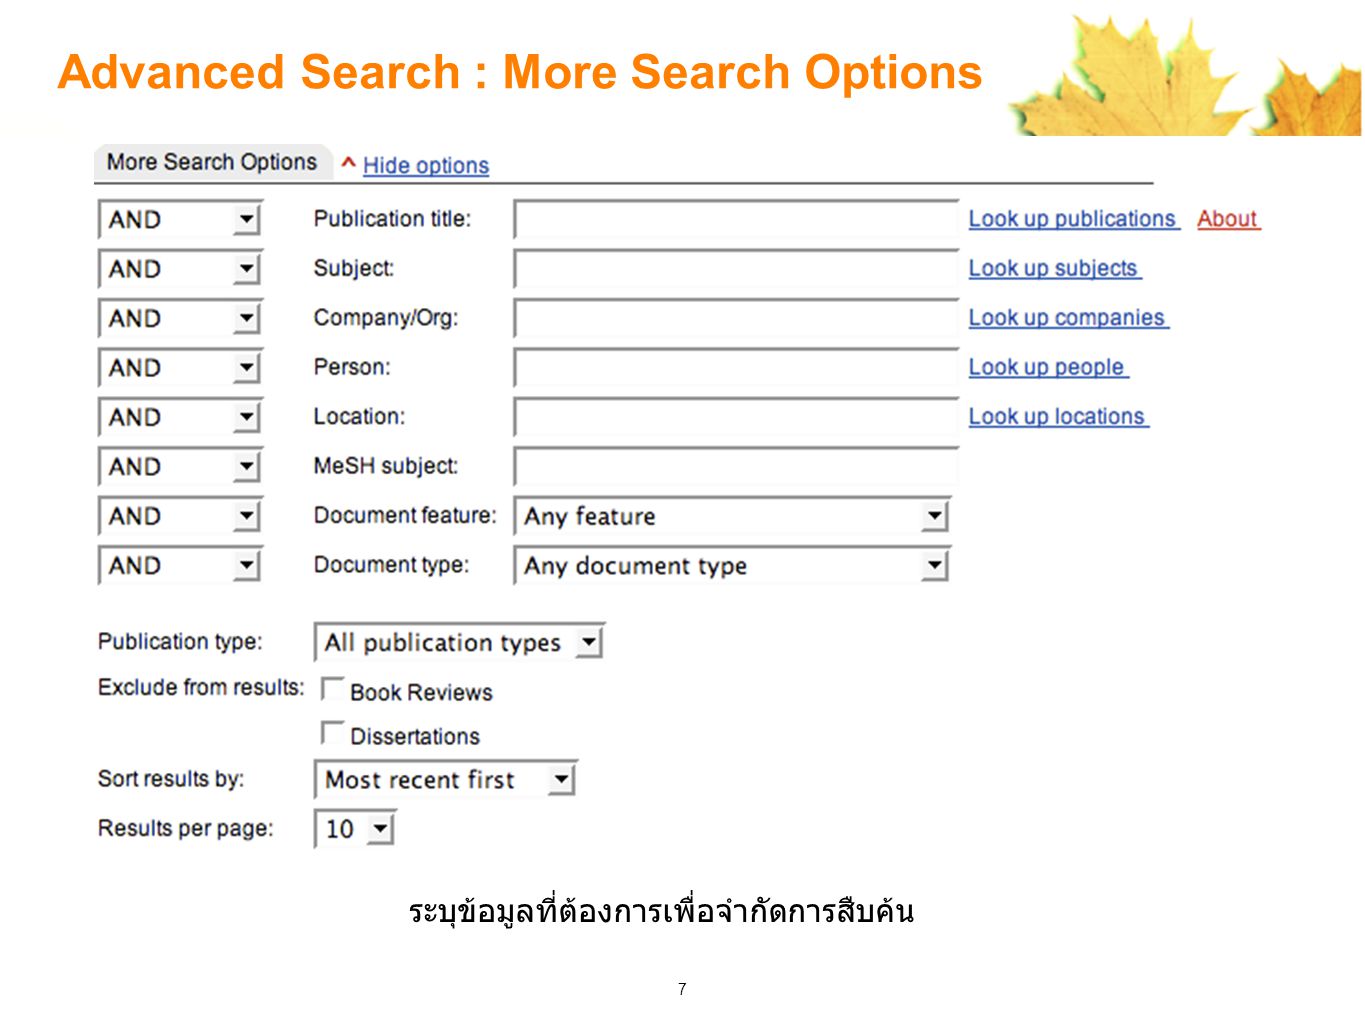 7 Advanced Search : More Search Options ระบุข้อมูลที่ต้องการเพื่อจำกัดการสืบค้น